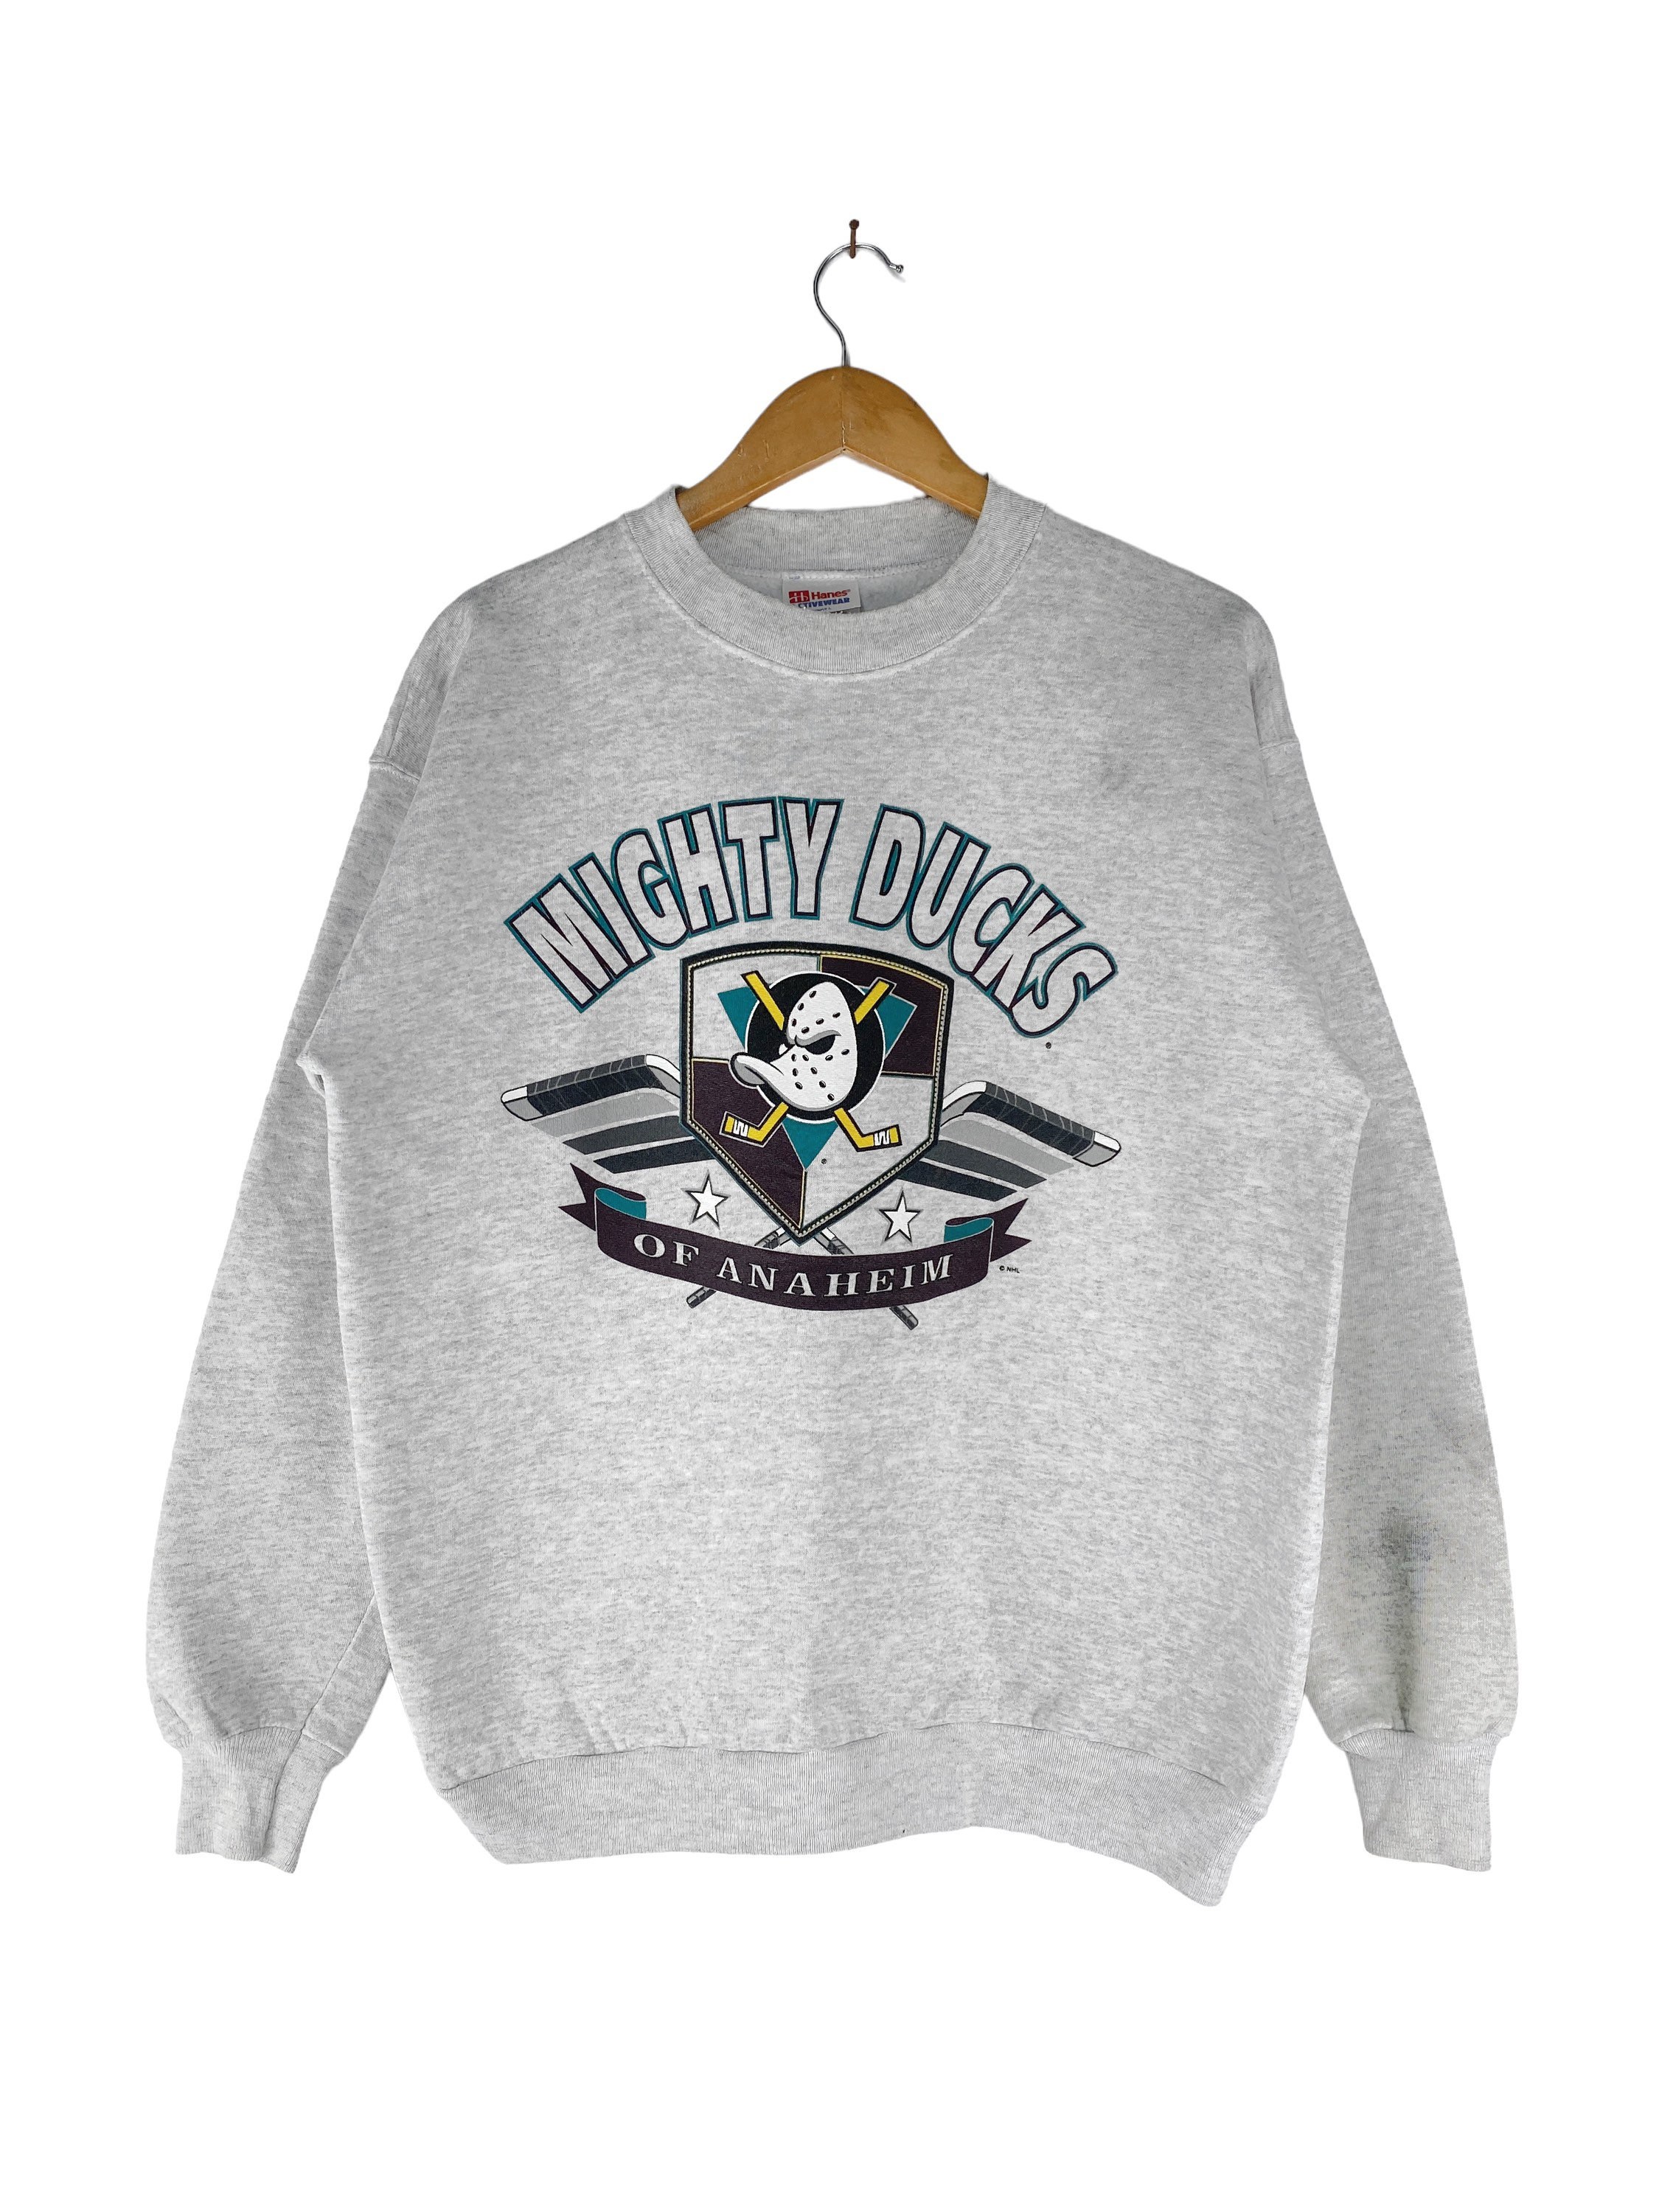 Anaheim Ducks Trevor Zegras The Flying Z Shirt, hoodie, sweater, long  sleeve and tank top